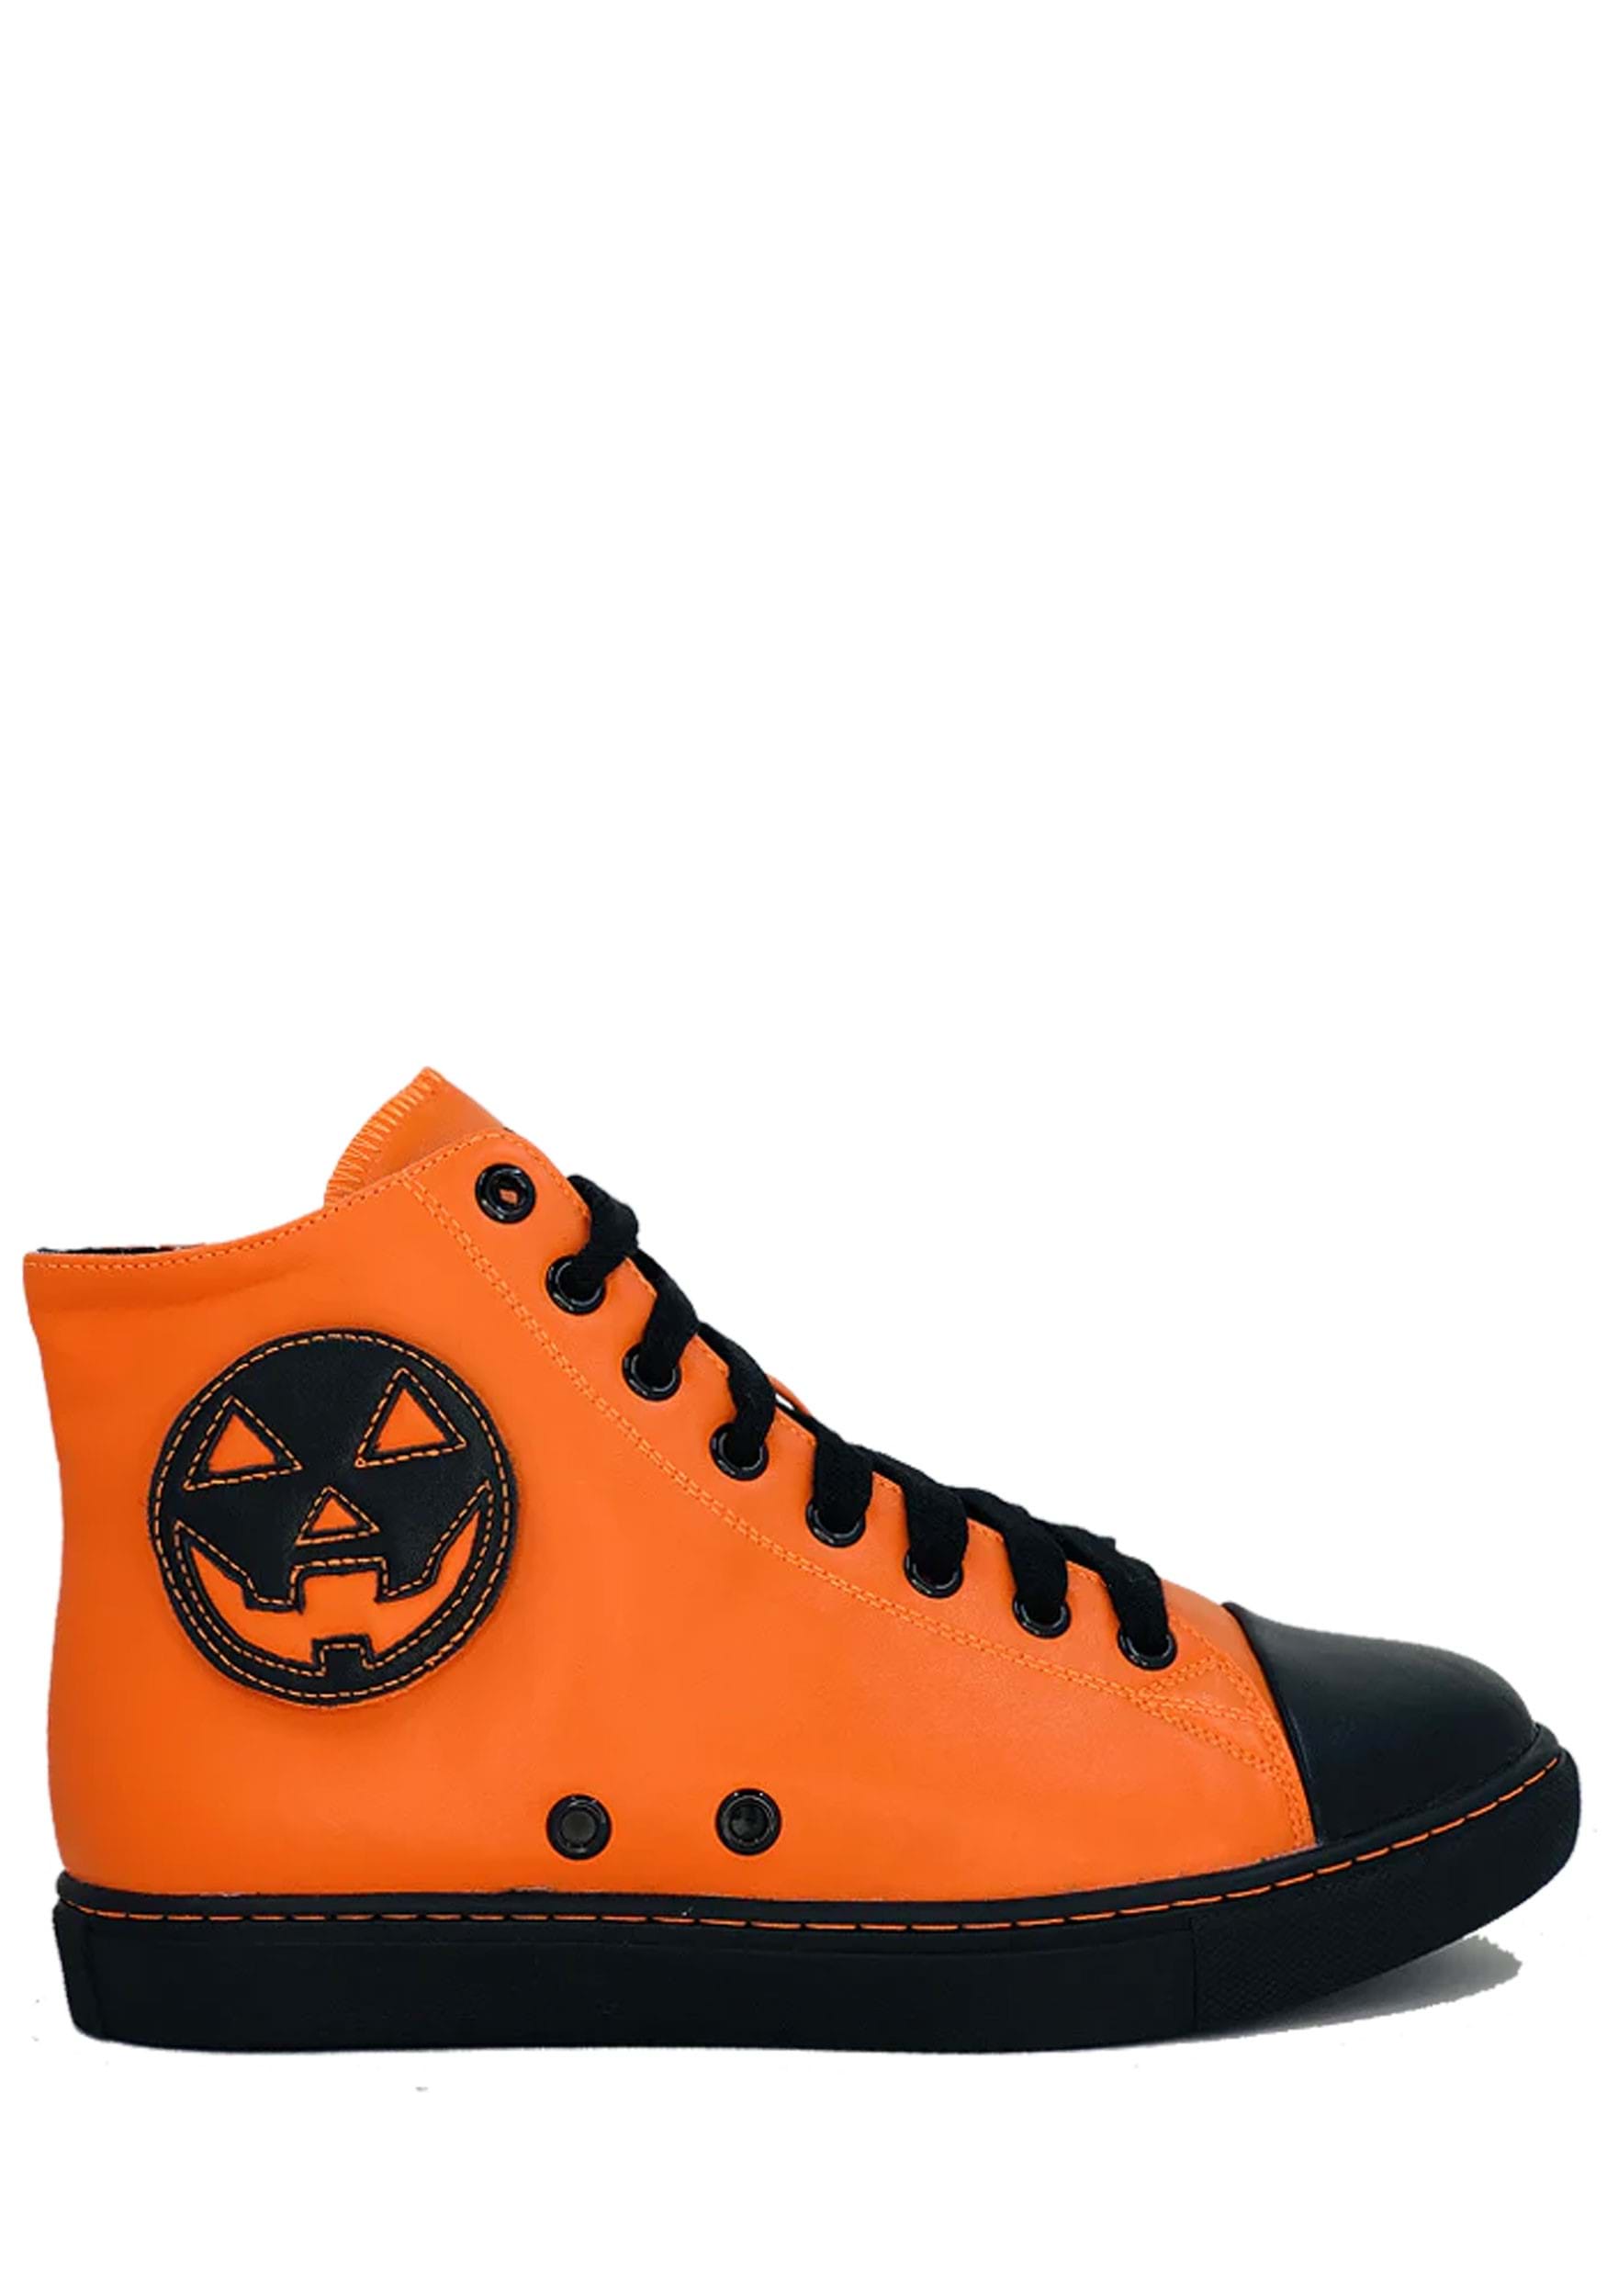 Image of Women's Orange Pumpkin Chelsea Jack High Top Sneaker | Halloween Footwear ID SVCHELSEAJACK-OR-10